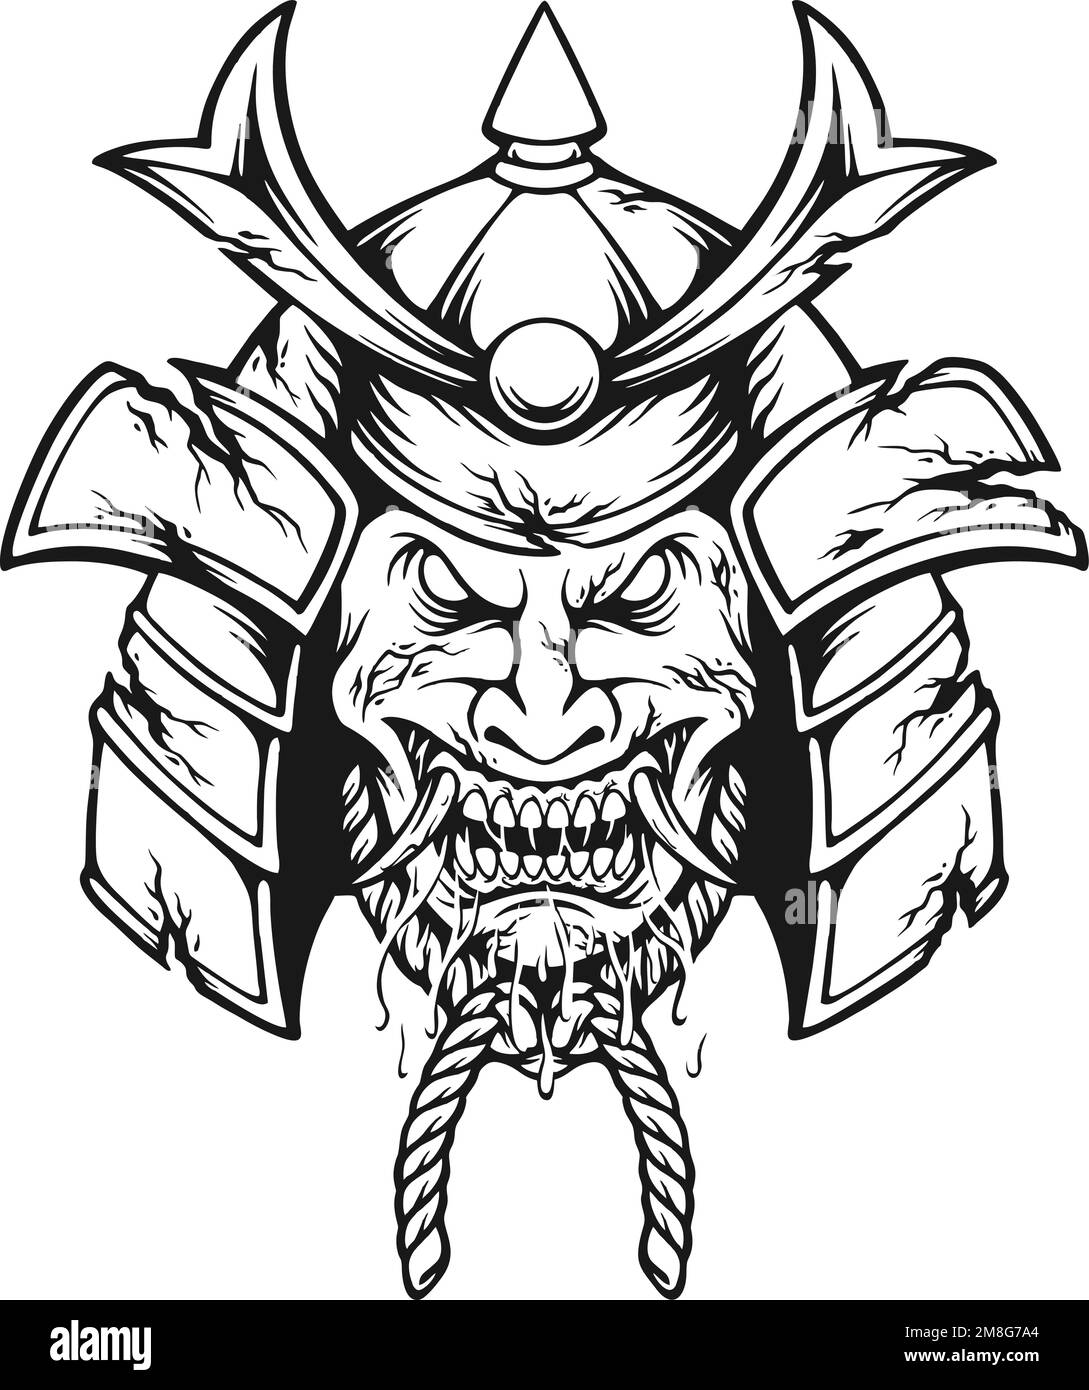 Monster ronin warrior with mask helmet samurai outline vector illustrations for your work logo, merchandise t-shirt, stickers and label designs Stock Vector